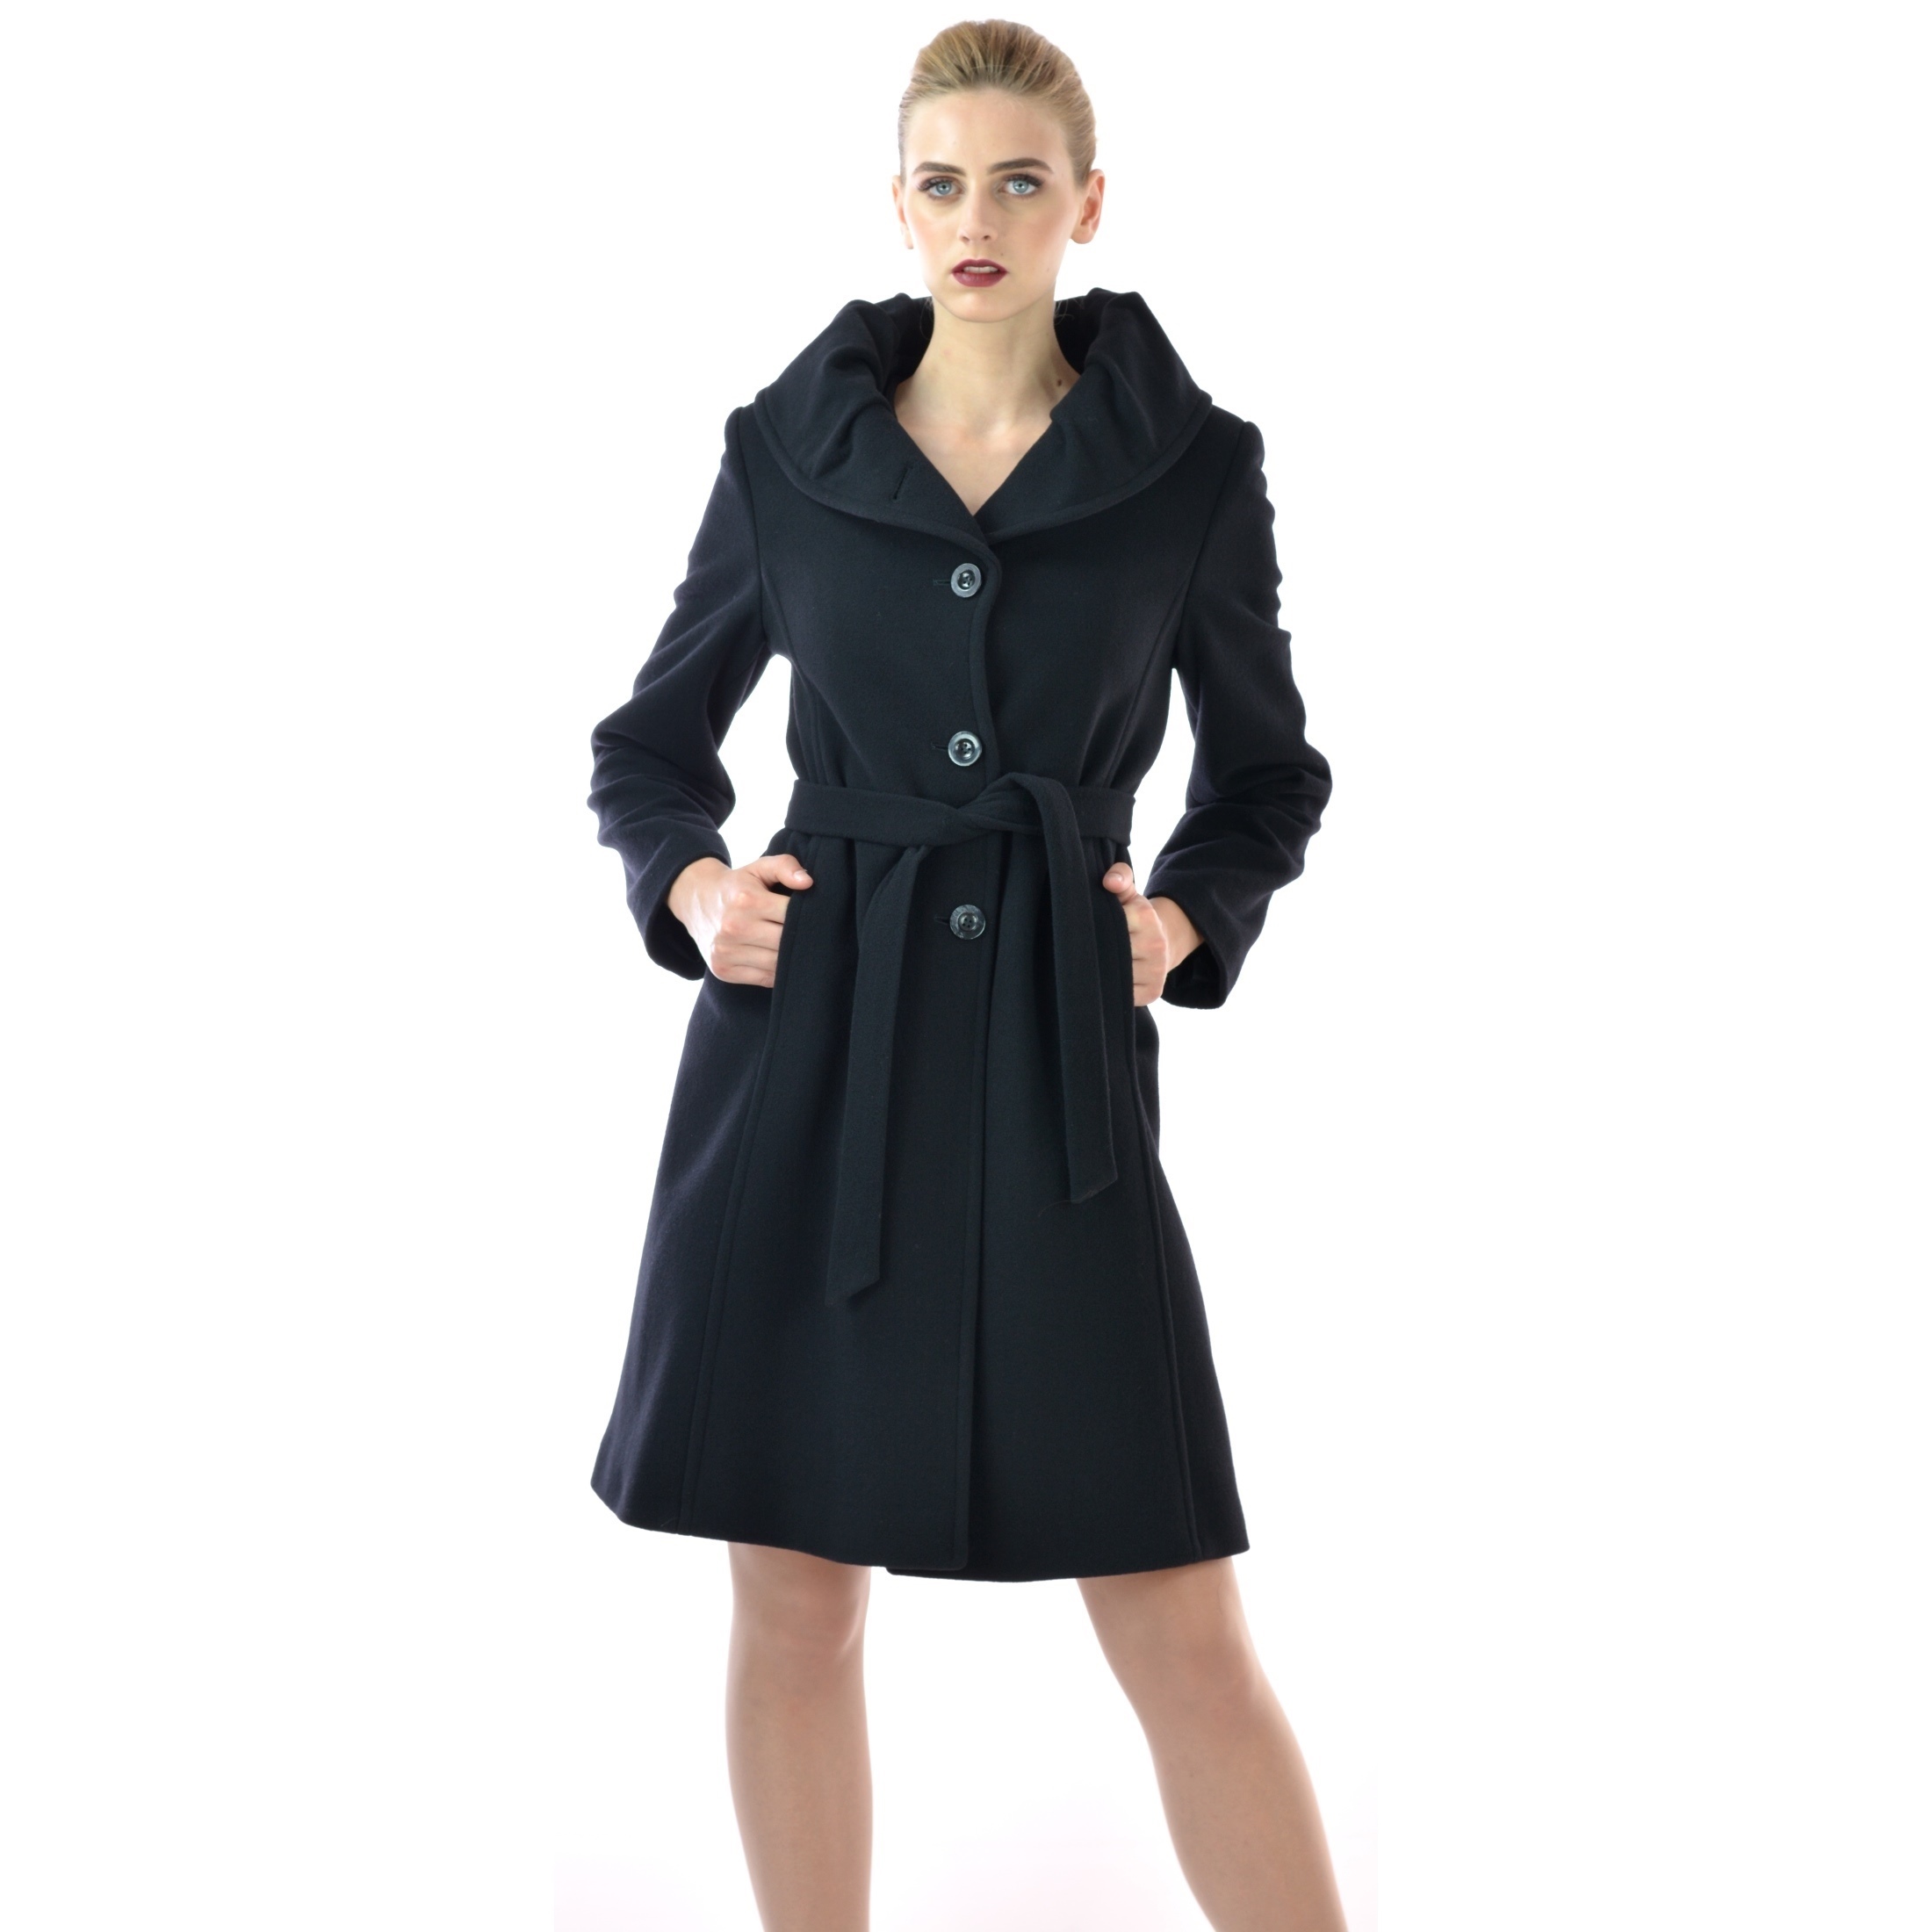 Picture of Women's Coat - M60163